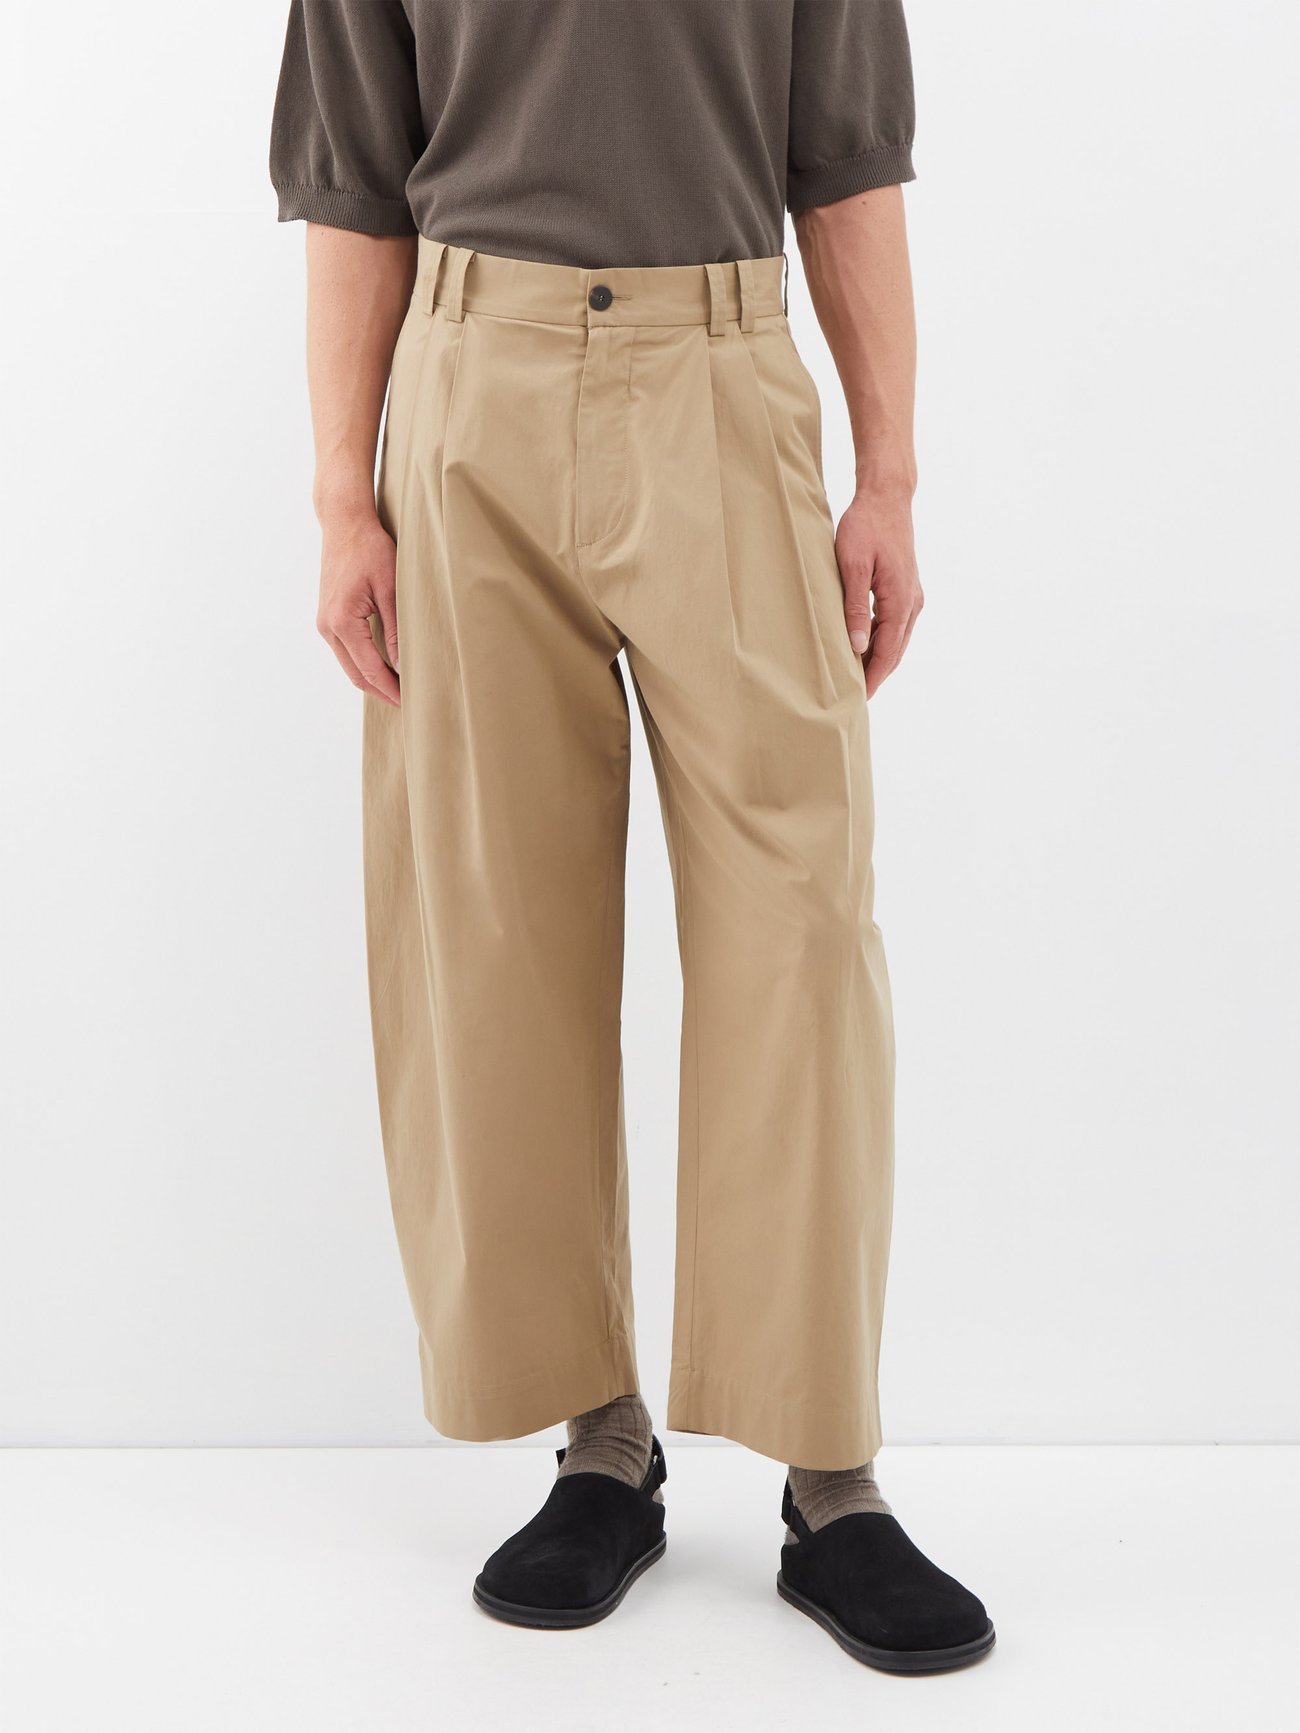 Beige Yale pleated cotton trousers | Studio Nicholson